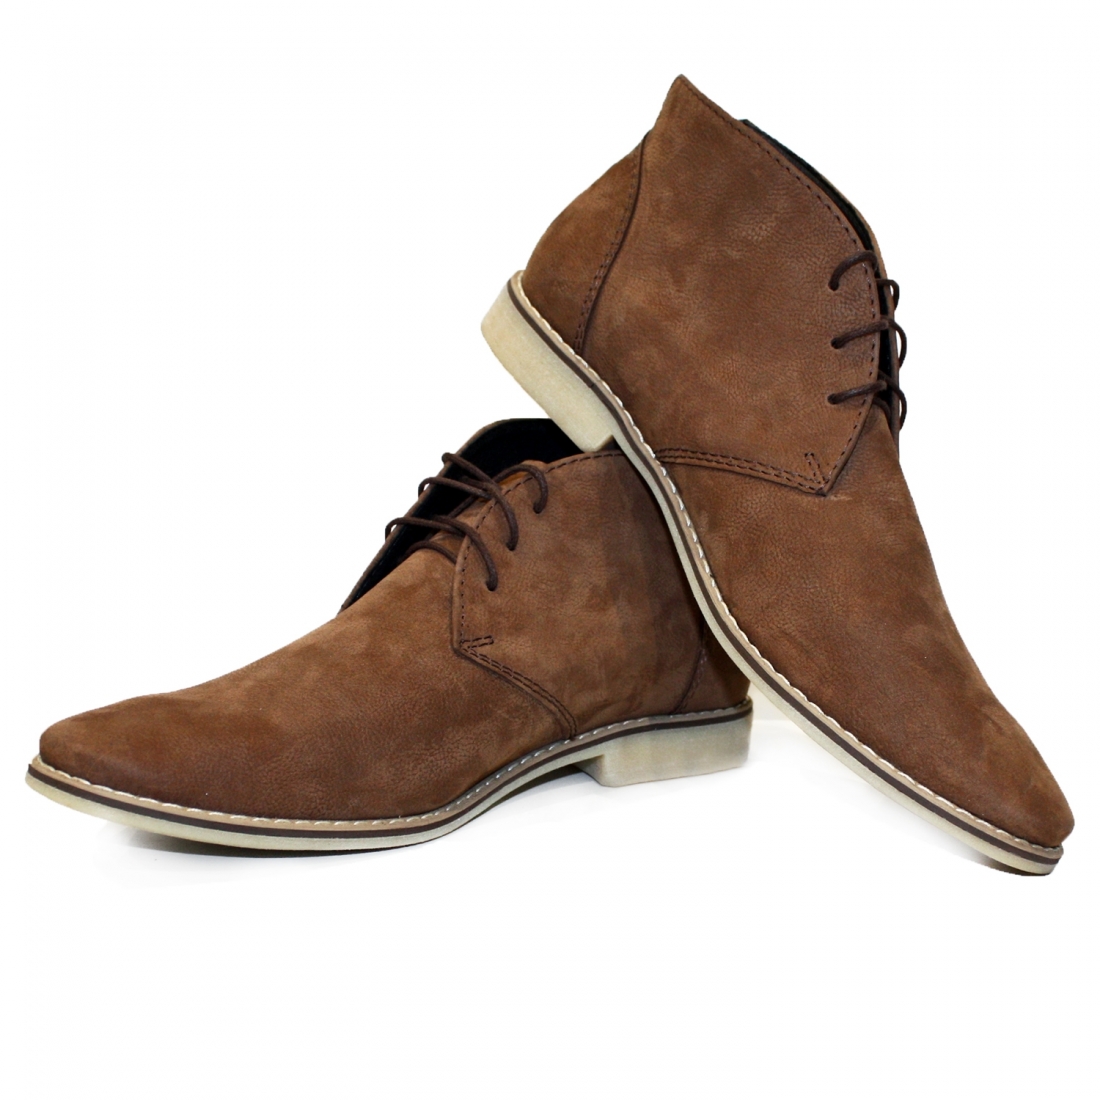 Modello Tarrora - чукка мужские - Handmade Colorful Italian Leather Shoes